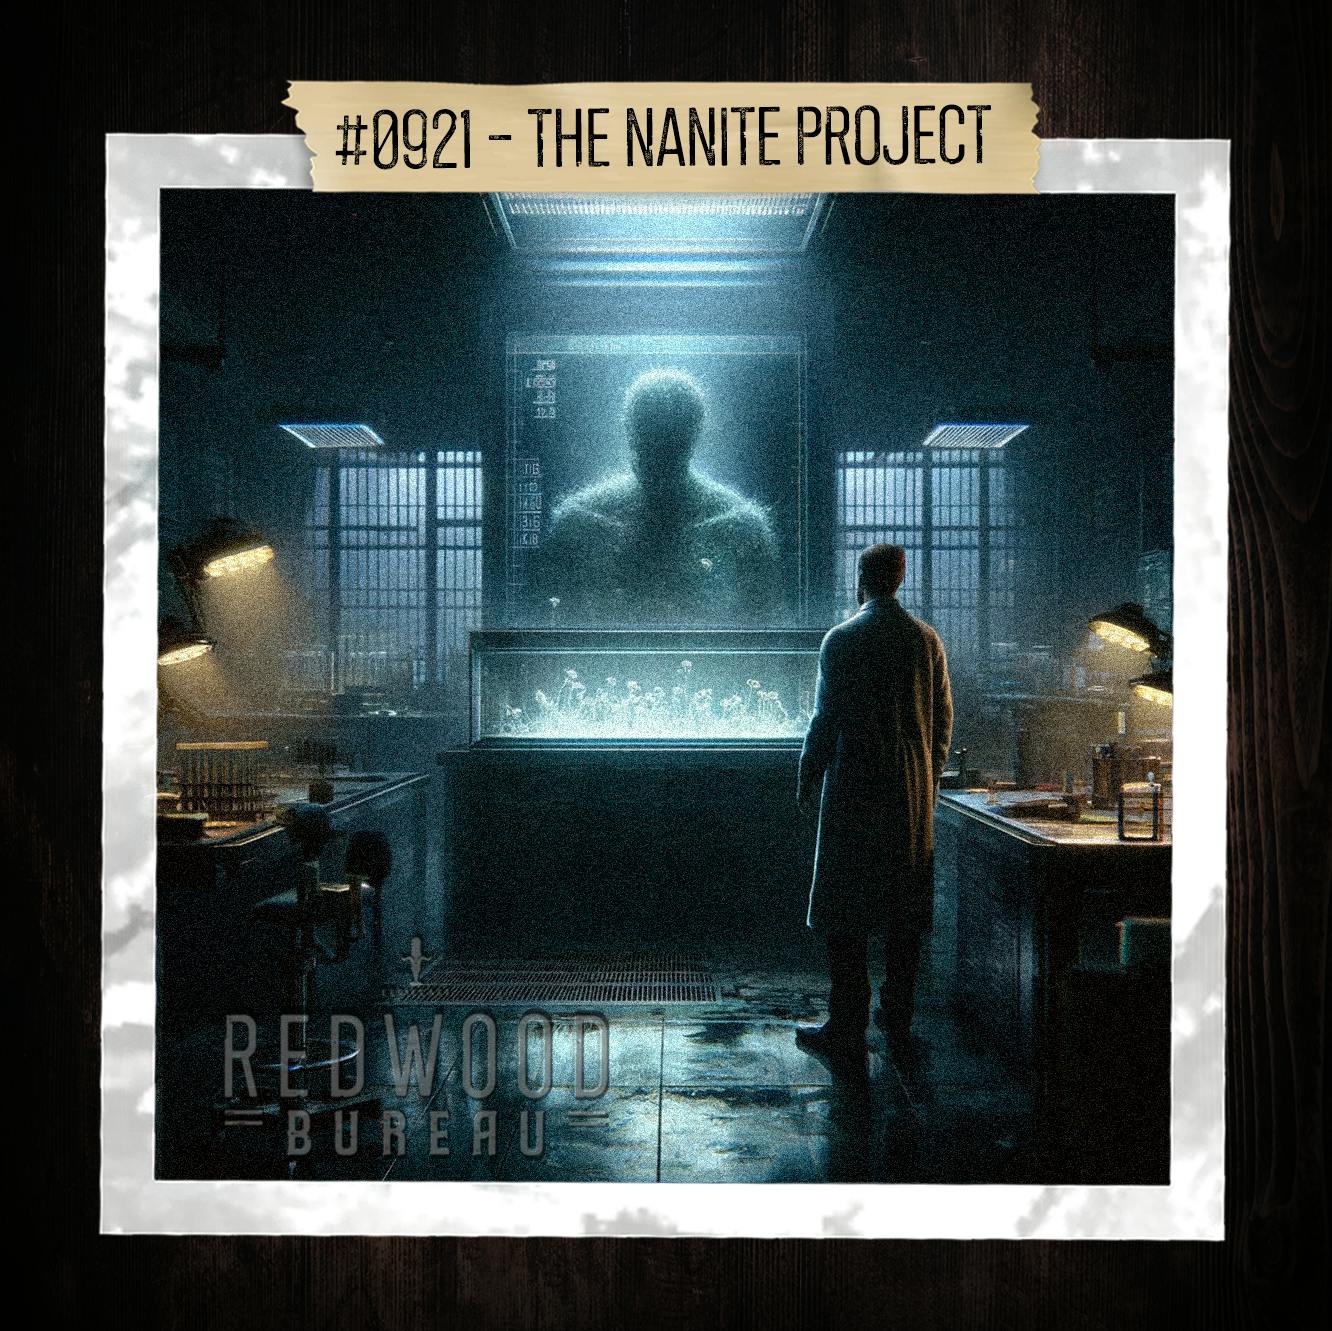 "THE NANITE PROJECT" - Redwood Bureau Phenomenon #0921